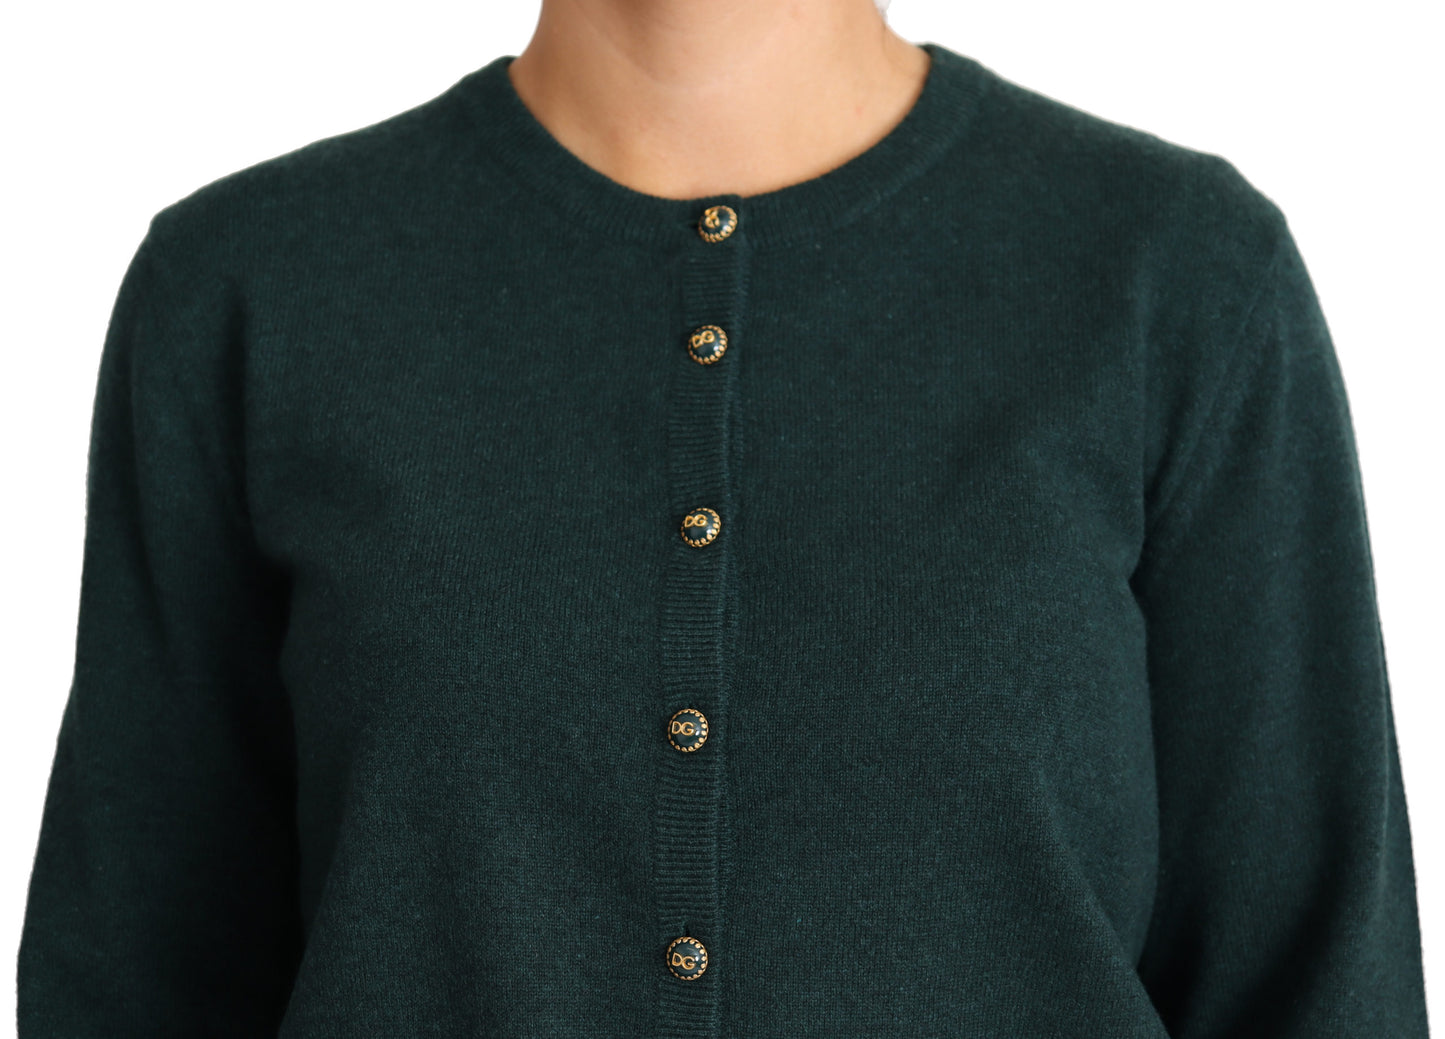 Dark Green Cashmere Crewneck Cardigan Sweater